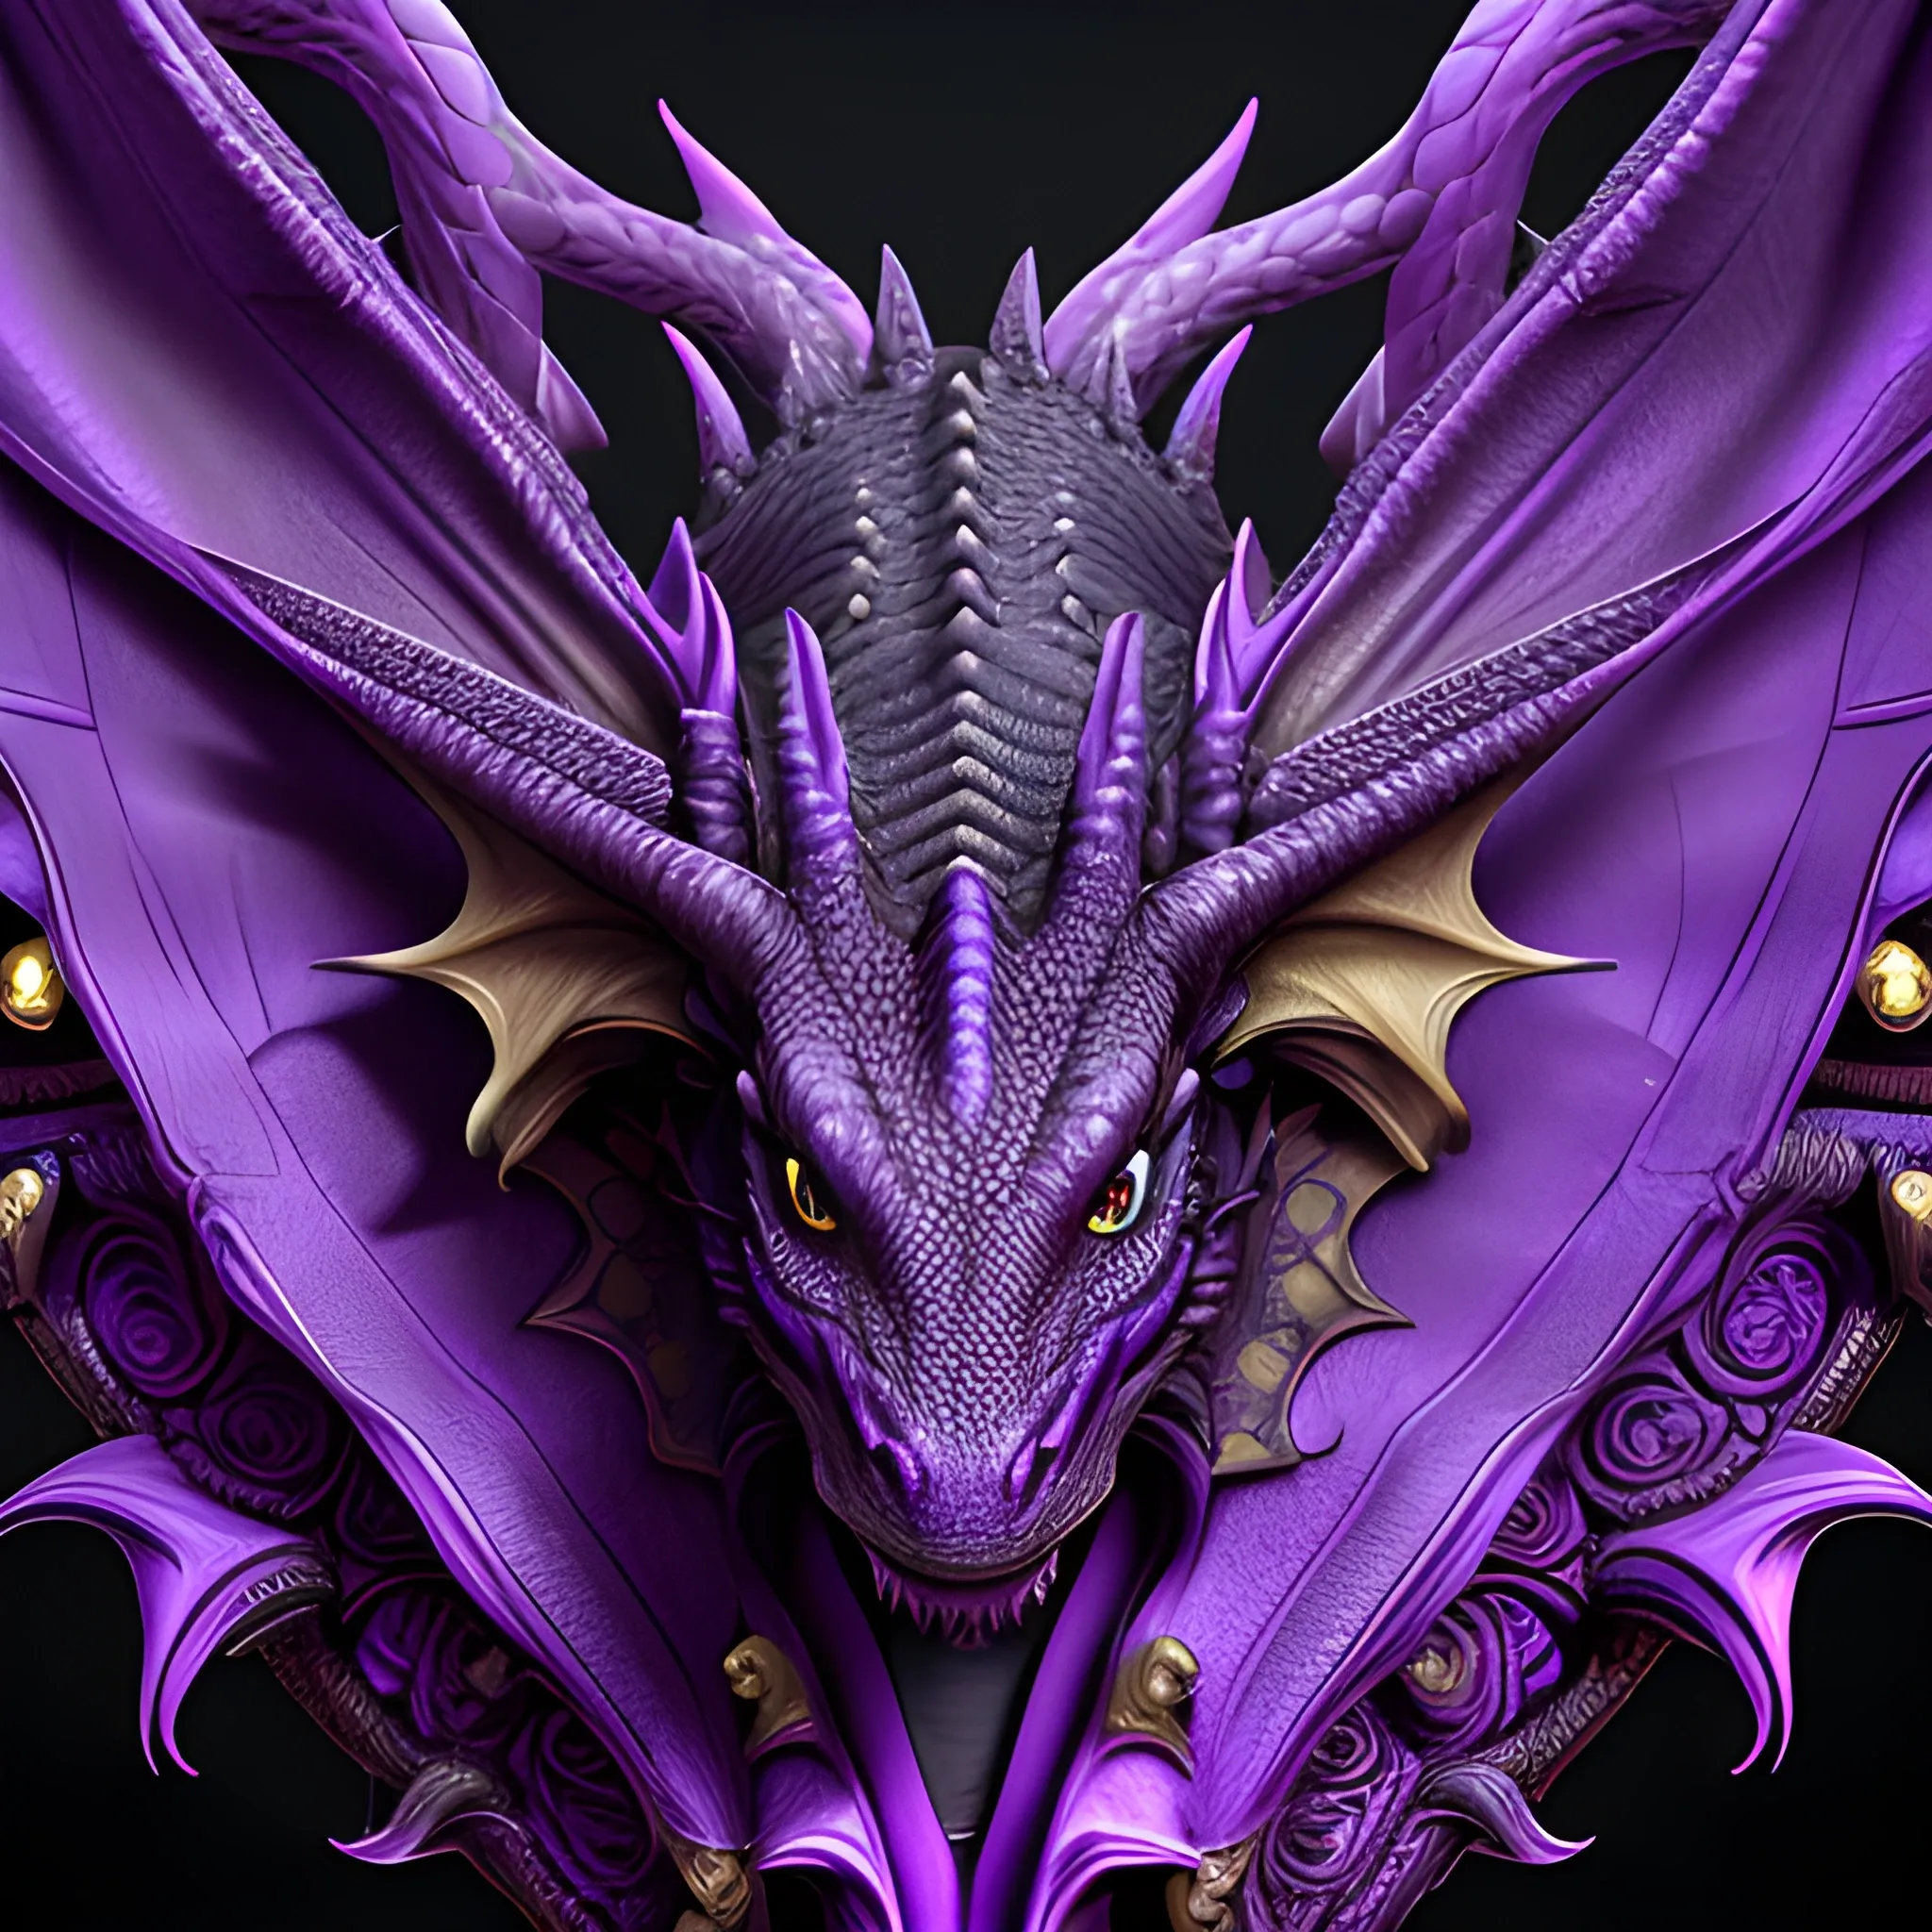 Dragon purple on a black background, logo, black background, digital art, highly detailed, fine detail, intricate, ornate, complex, octane render, unreal engine, photorealistic , Trippy, valentine themed dragon
